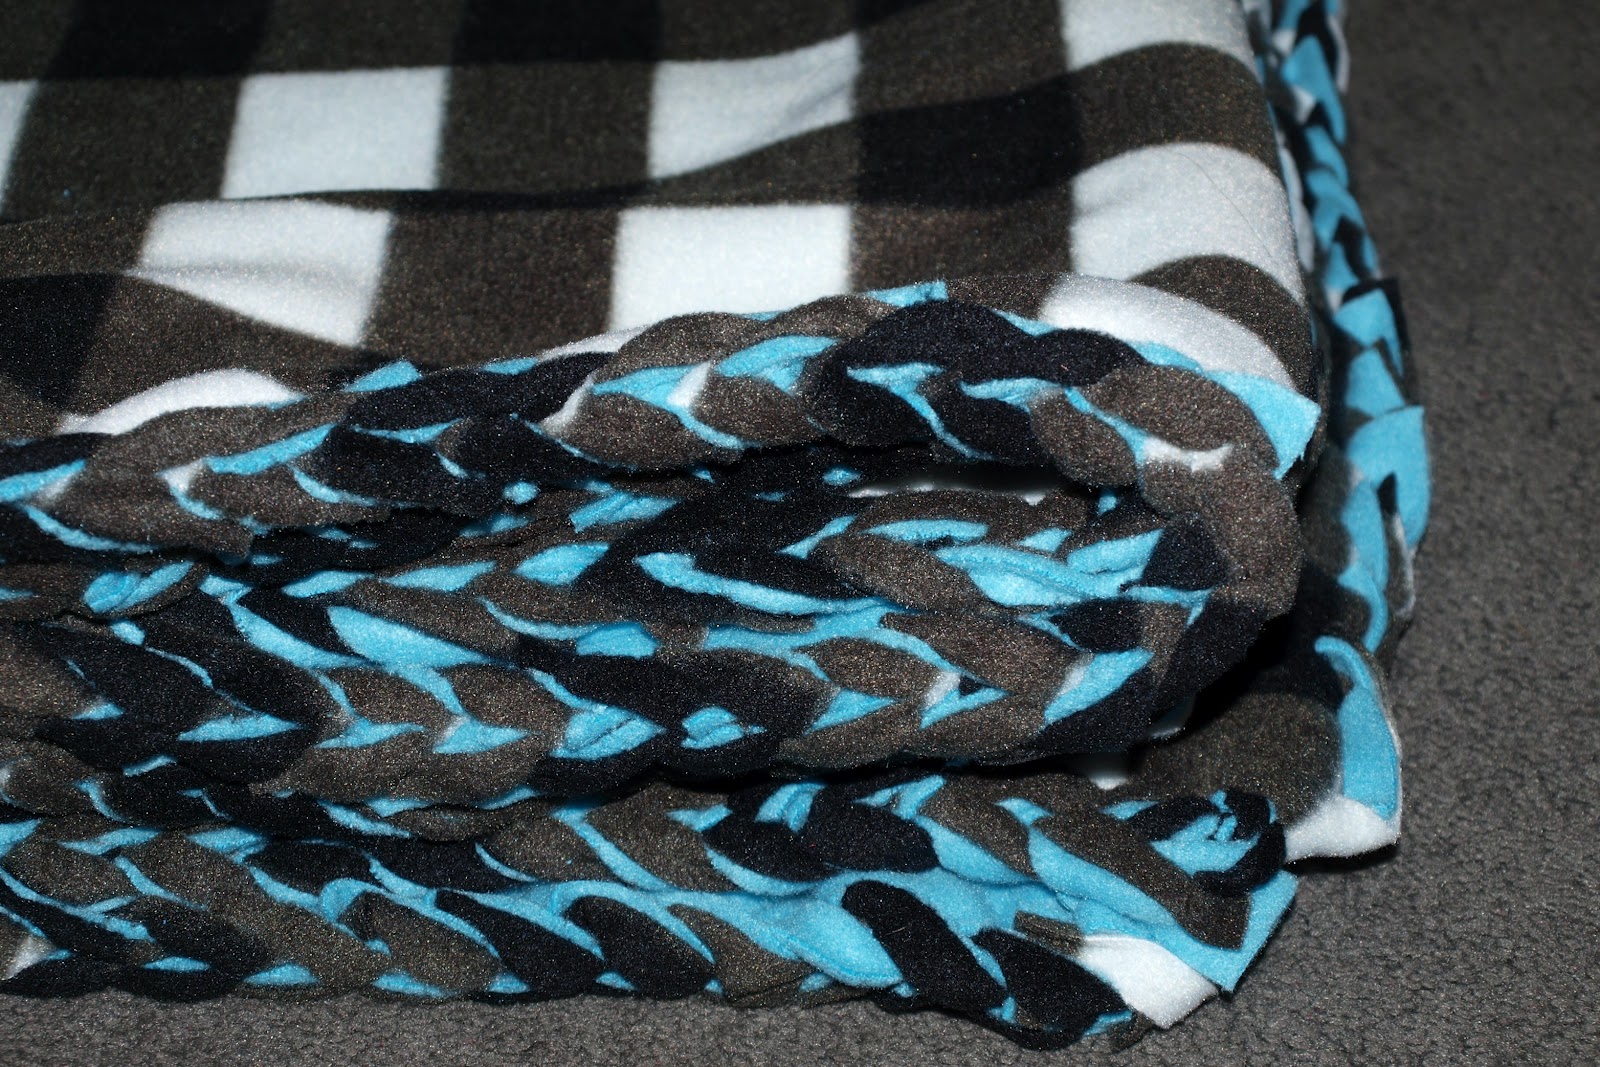 Elemental Carbon Fleece Blanket with Crocheted Edge // DIY